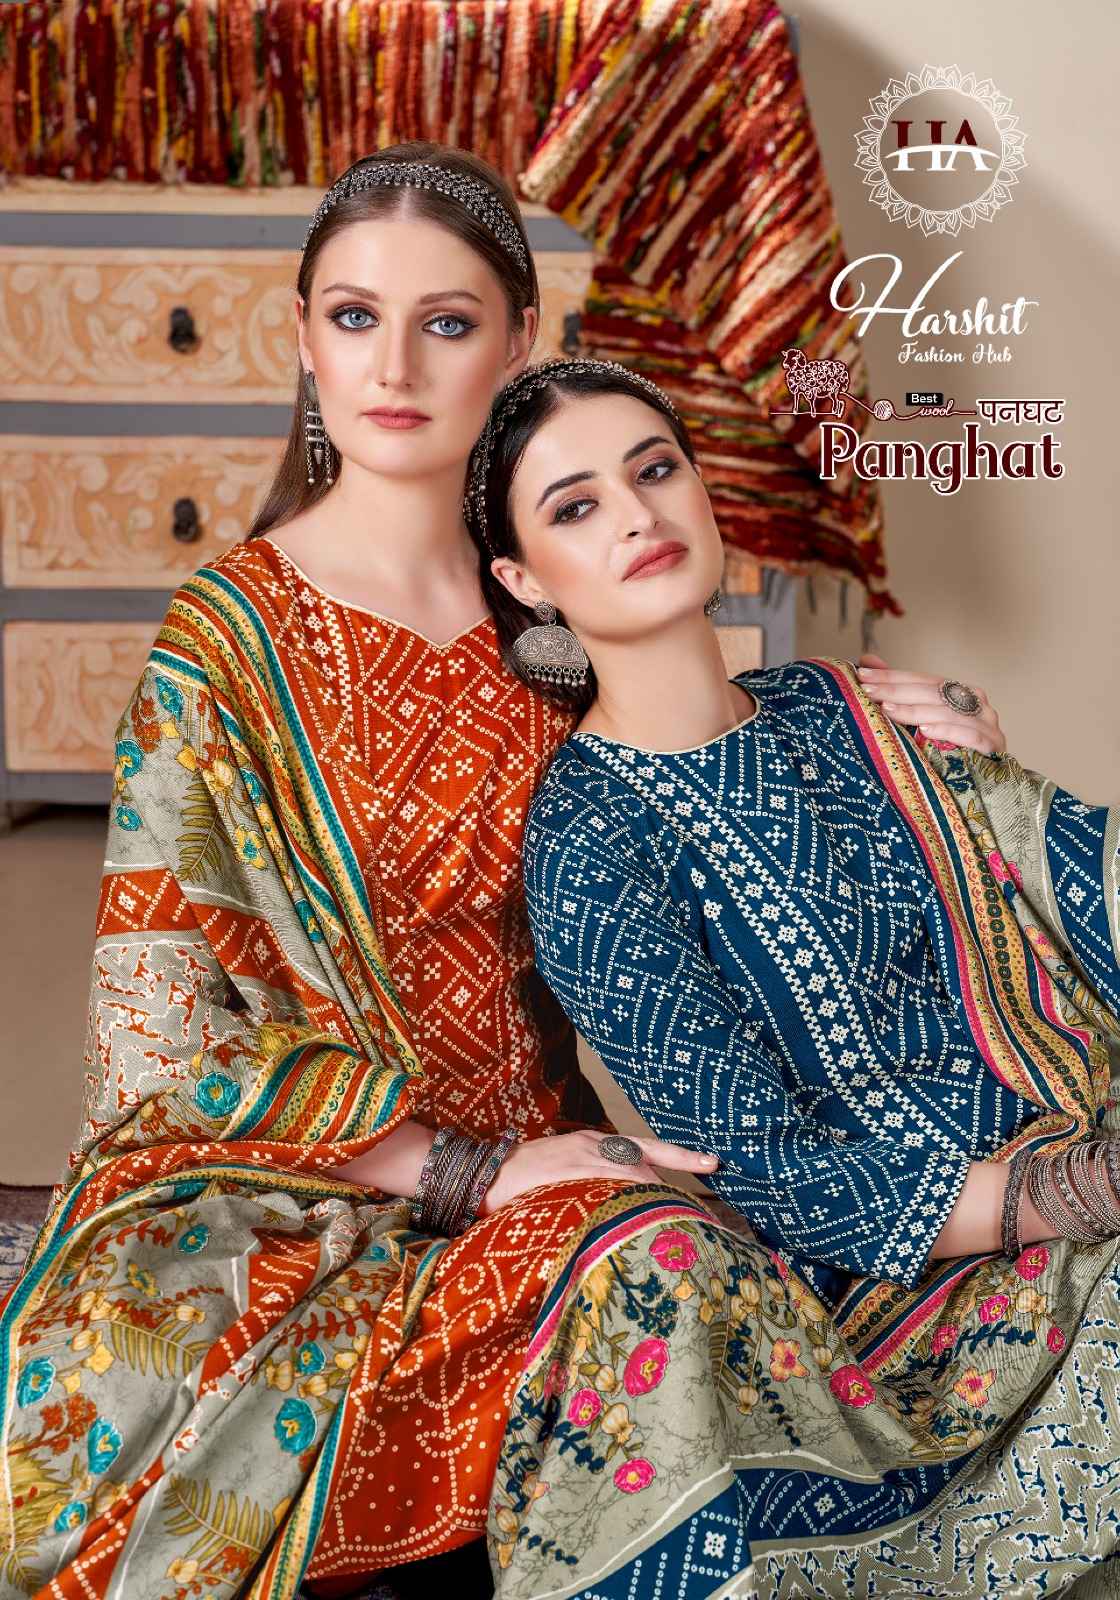 Harshit Fashion Hub Panghat Pashmina Dress Material 8 pcs Catalogue